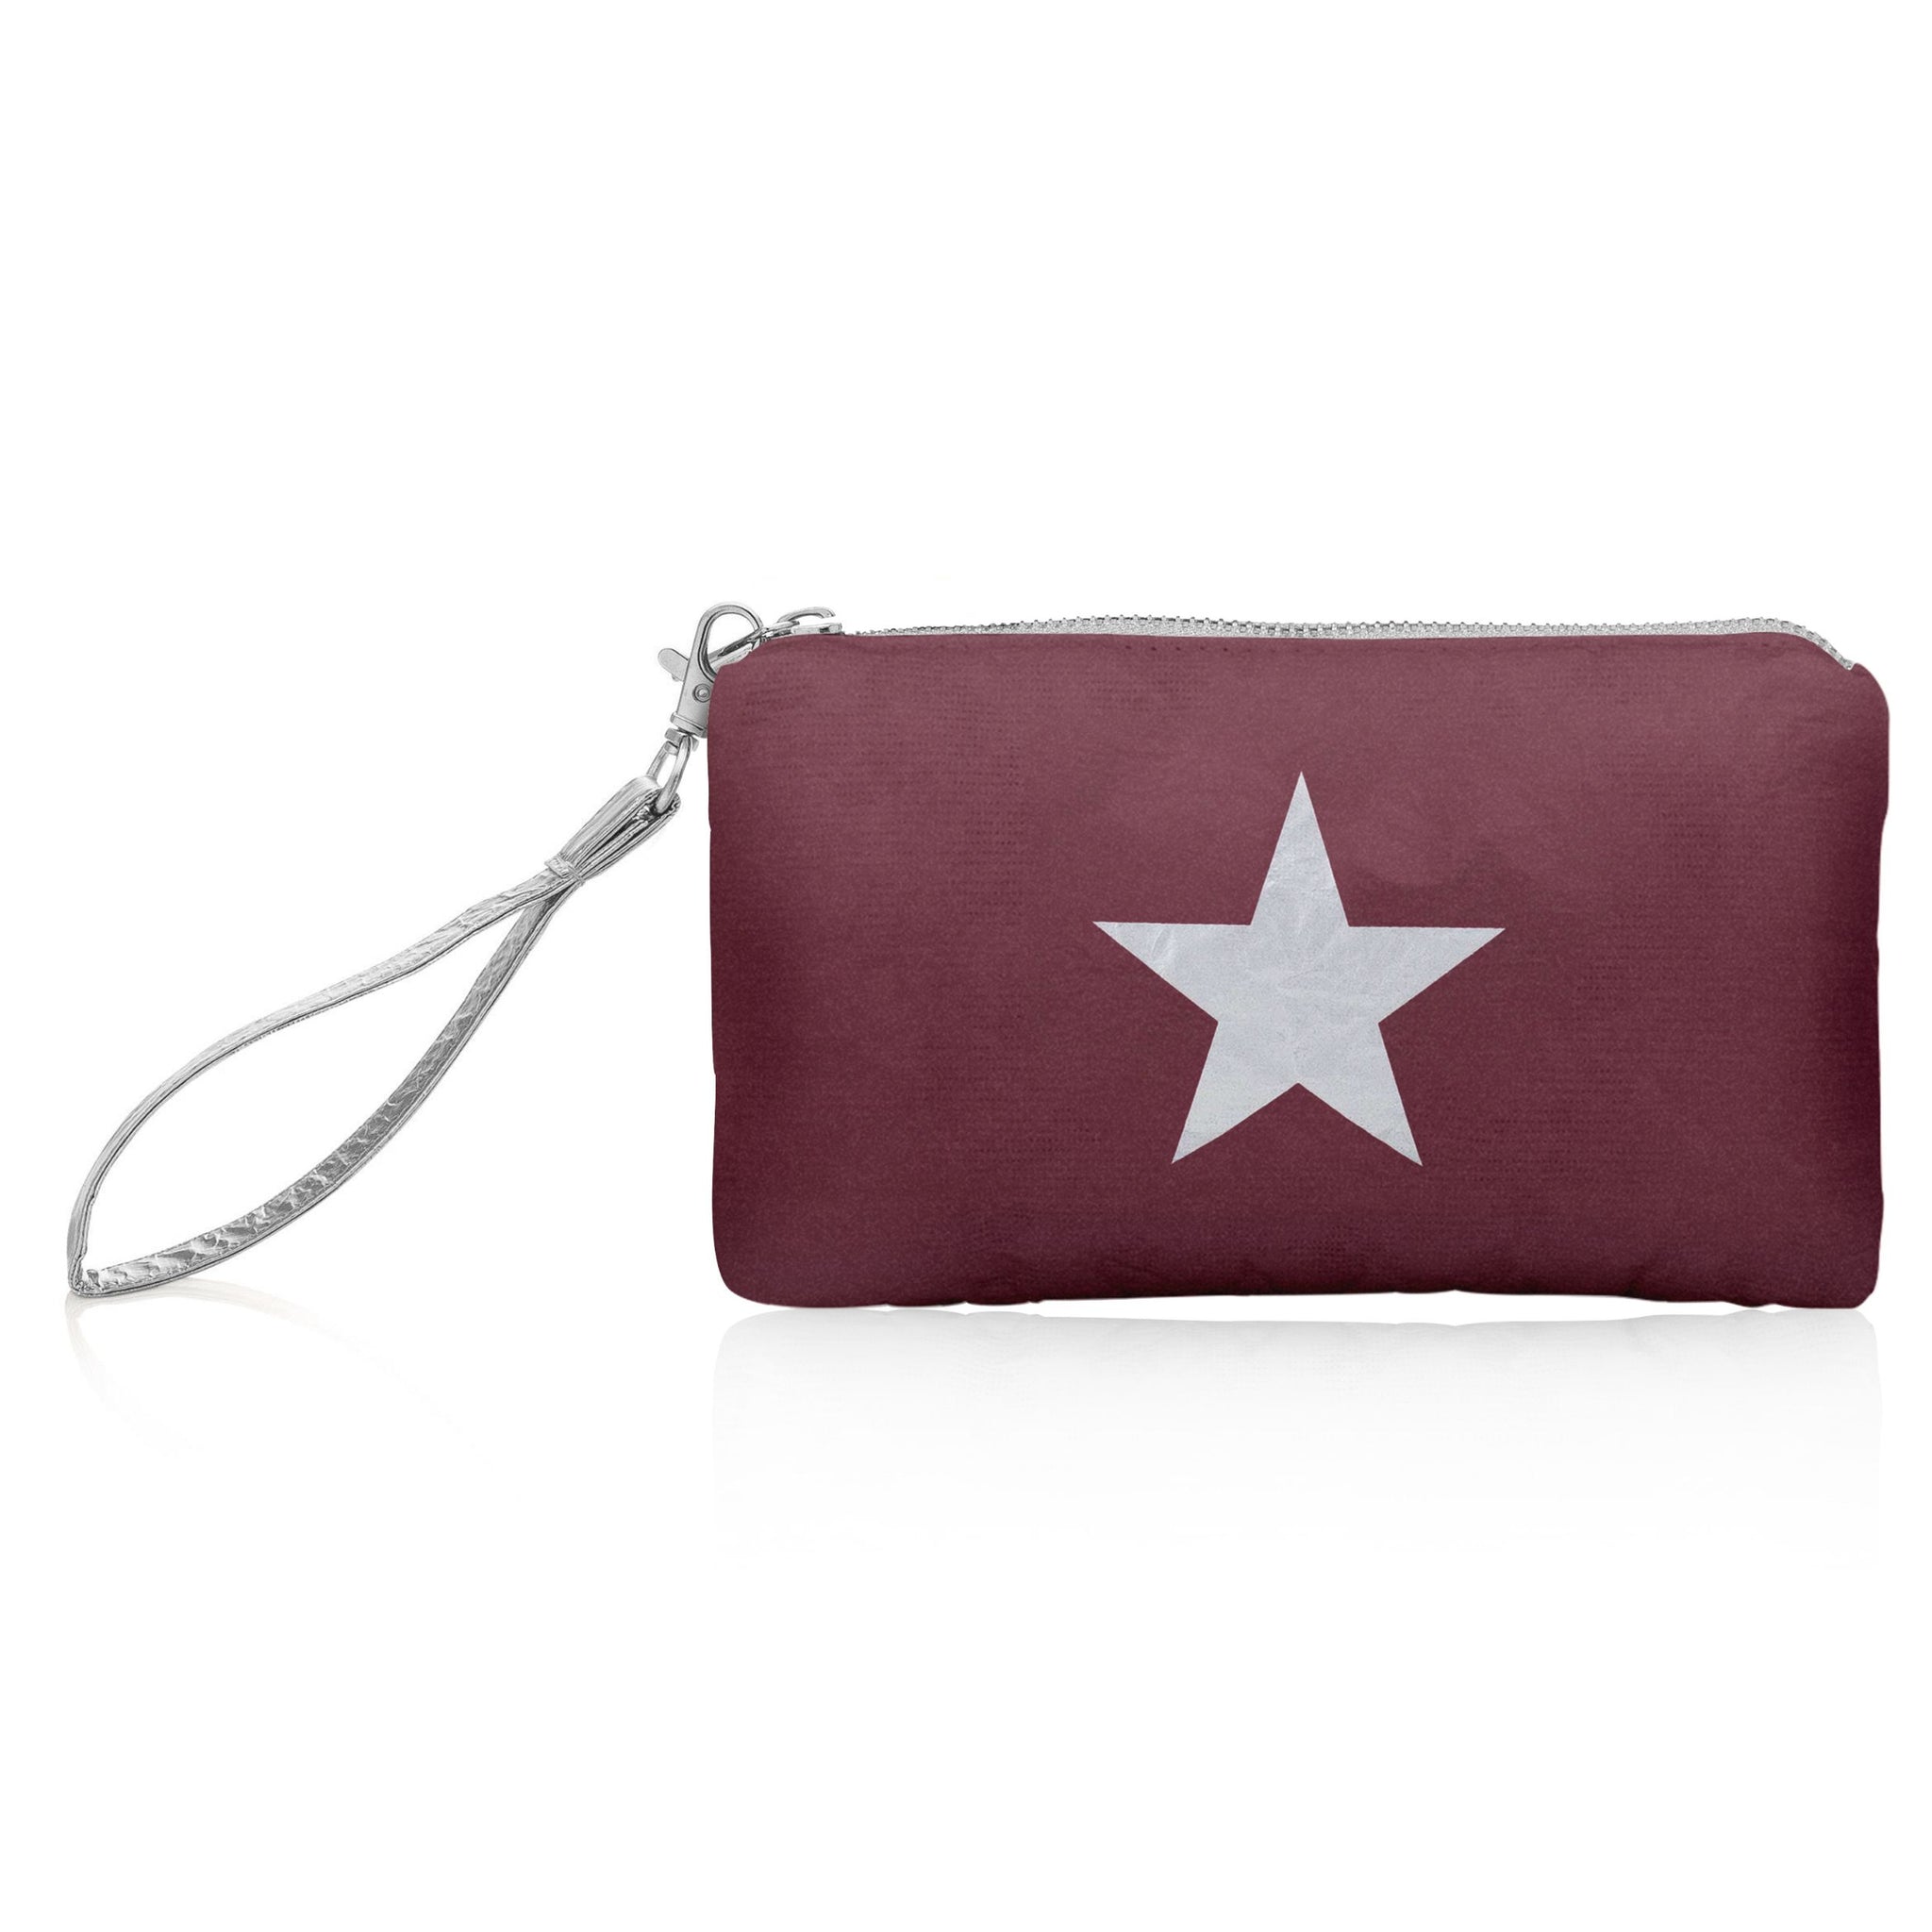 Hi Love's Stars Fabric Collection of Handbags, Packs & Totes